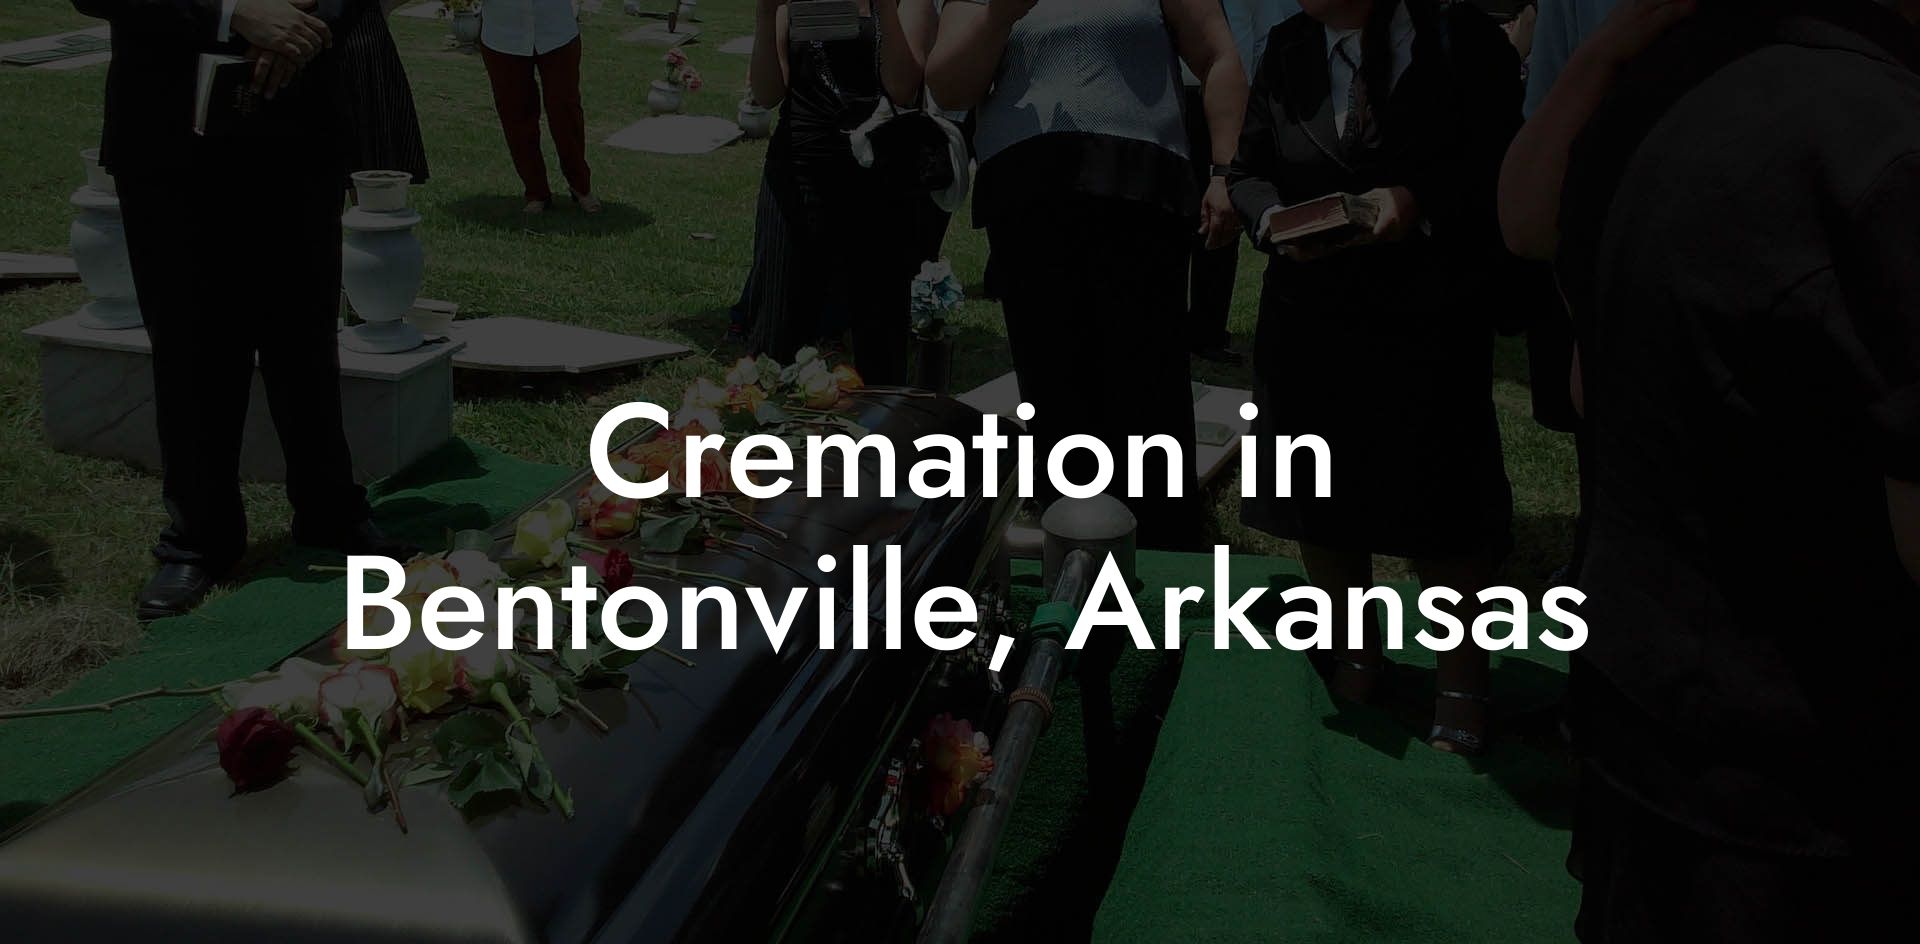 Cremation in Bentonville, Arkansas